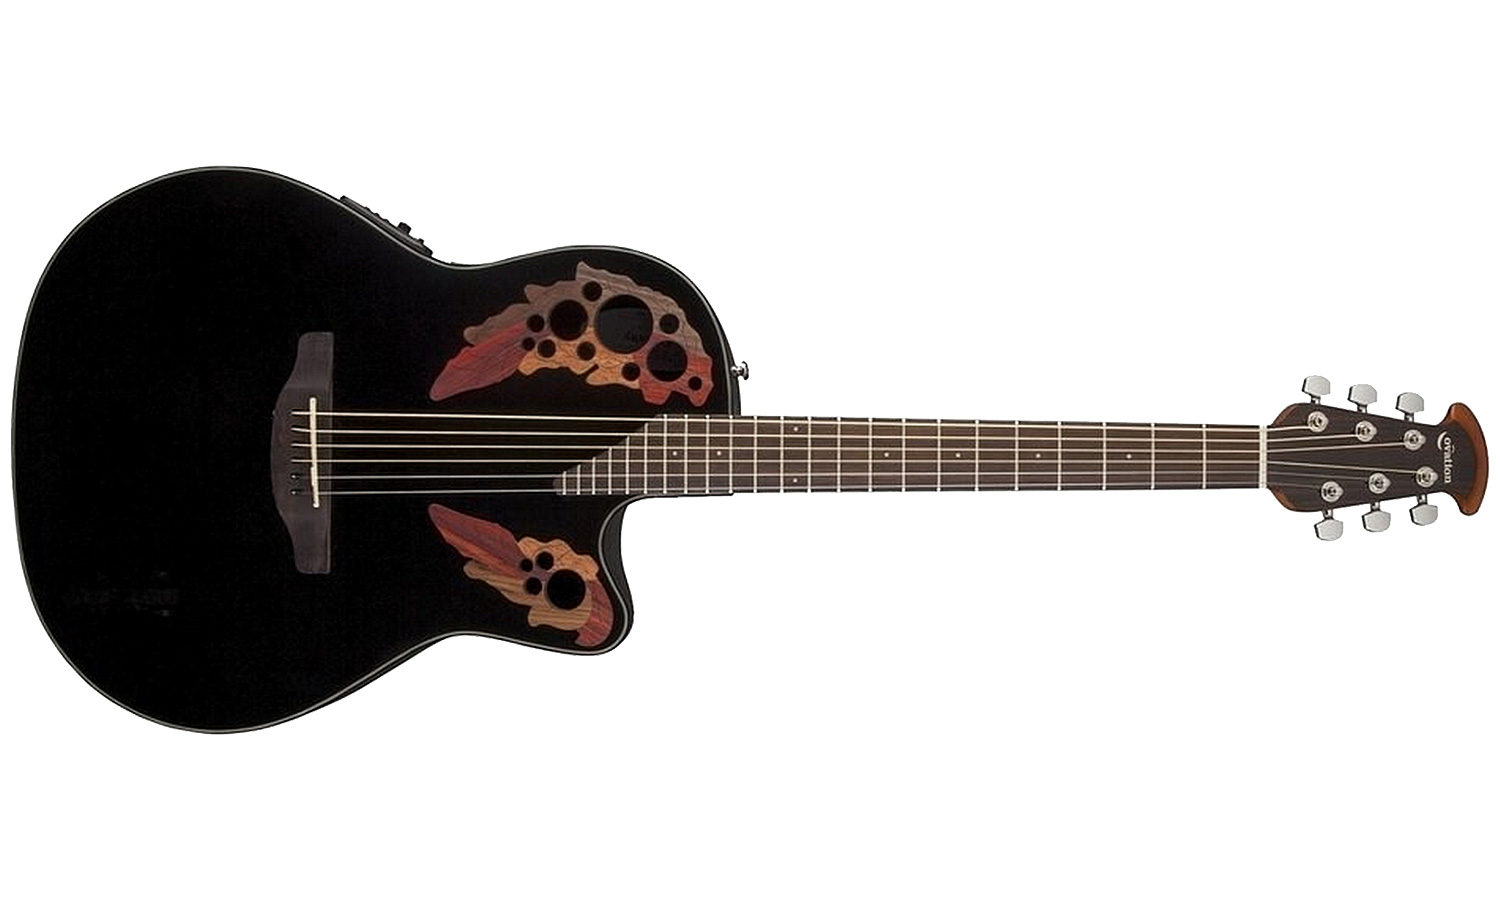 Ovation Ce44-5 Celebrity Elite Mid Cutaway Noir - Black - Electro acoustic guitar - Variation 1